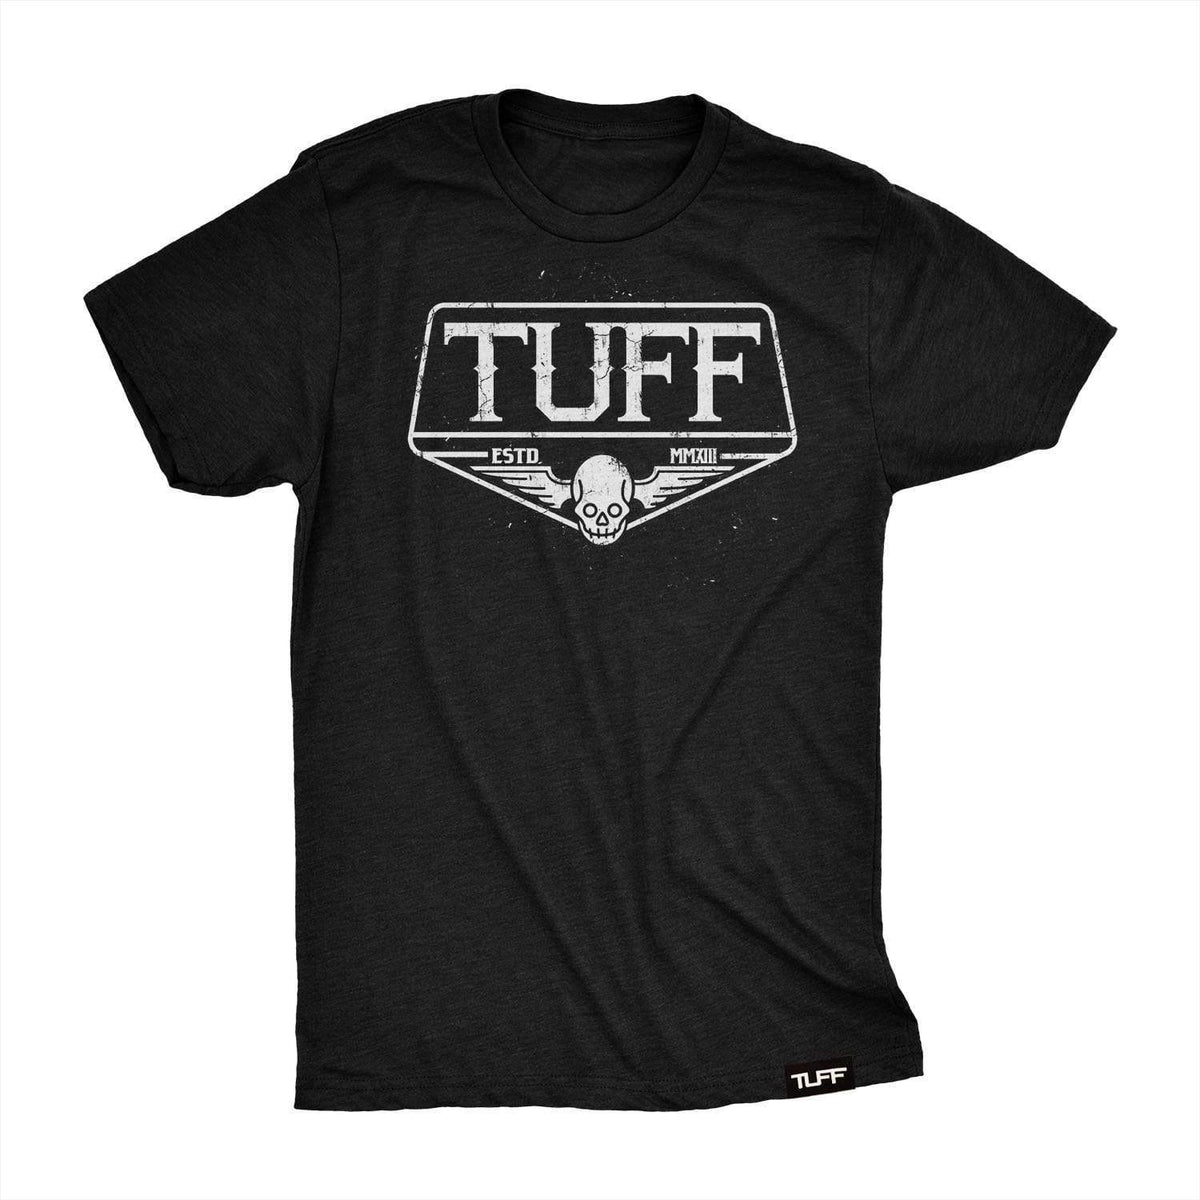 TUFF Skull Wings Tee S / Black TuffWraps.com